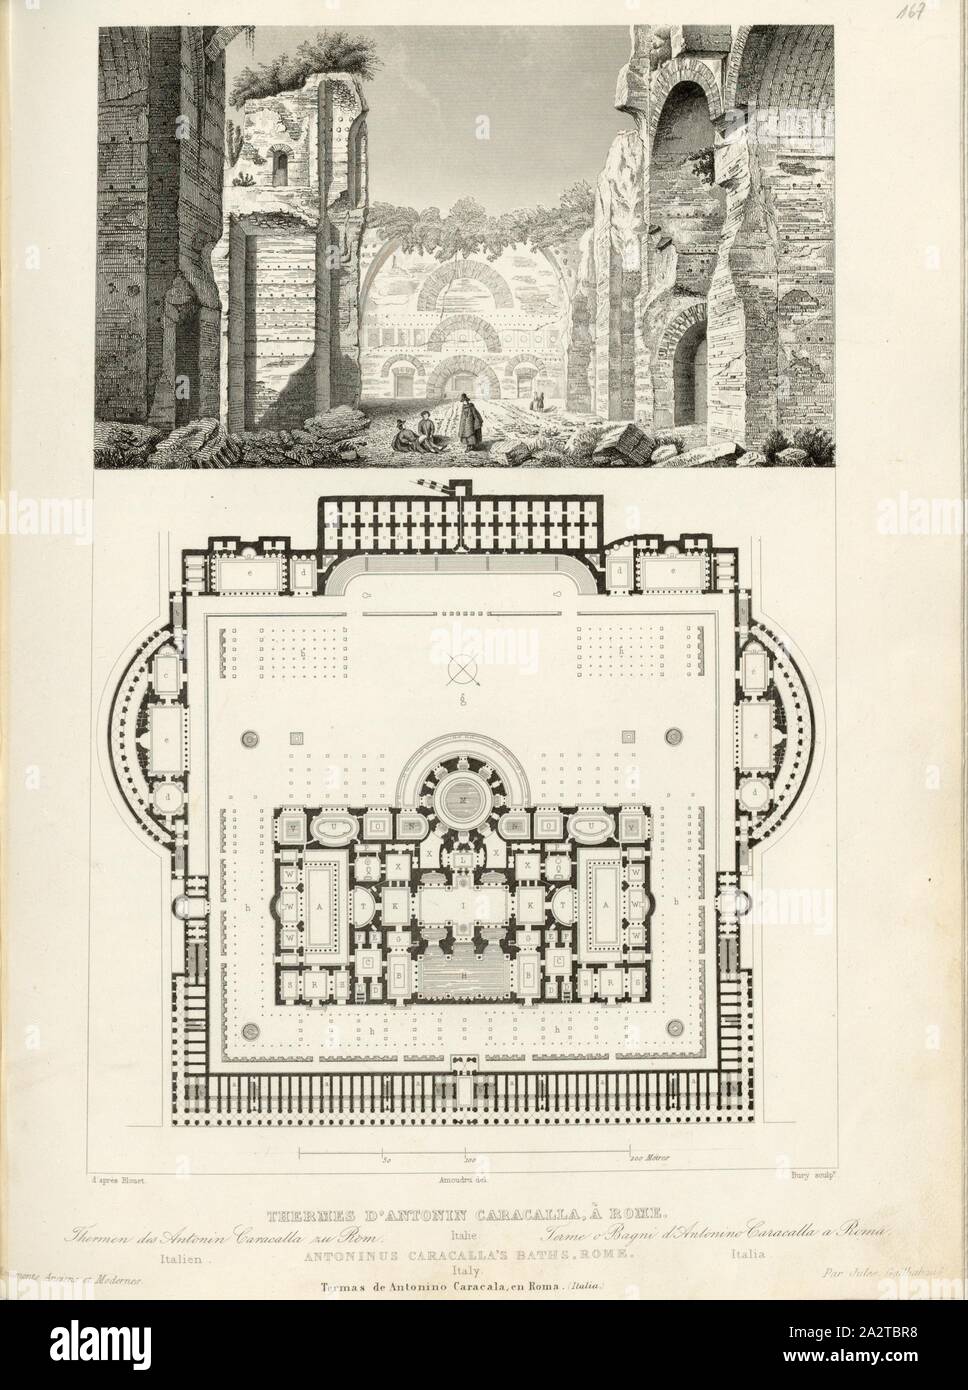 Baths of Antonin Caracalla, in Rome, Caracalla Baths in Rome, signed: d'après Blouet, Amoudru (del.); Bury (sculp.), Fig. 100, S. 405, Blouet (d'après); Amoudru (del.); Bury (sculp.), 1853, Jules Gailhabaud: Monuments anciens et modernes. Bd. 1. Paris: Librairie de Firmin Didot frères, 1853 Stock Photo